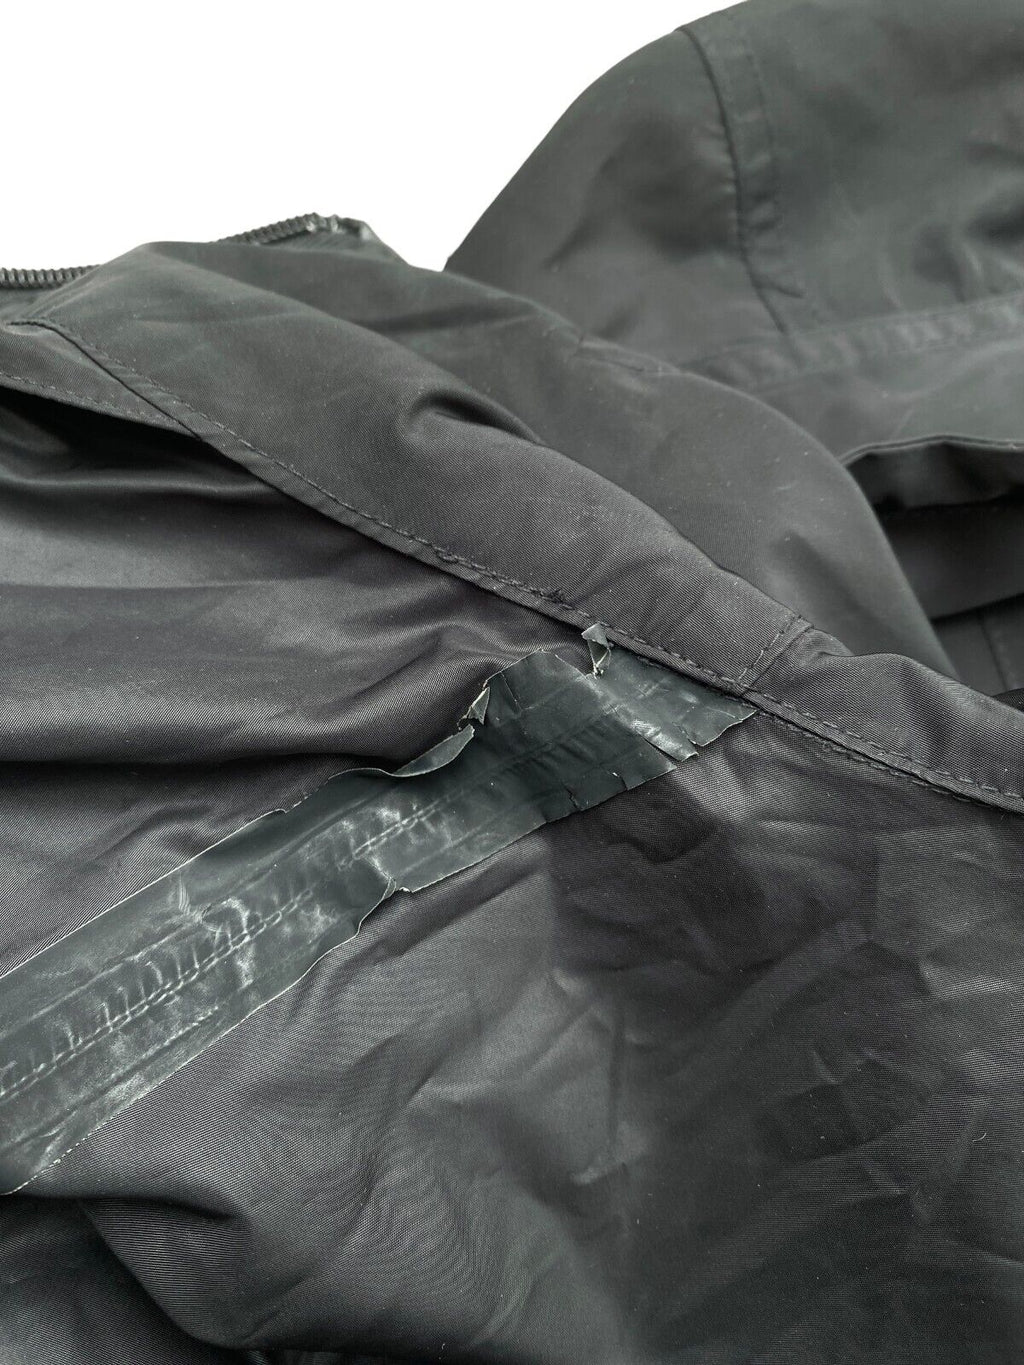 Black Parka / Raincoat Jacket